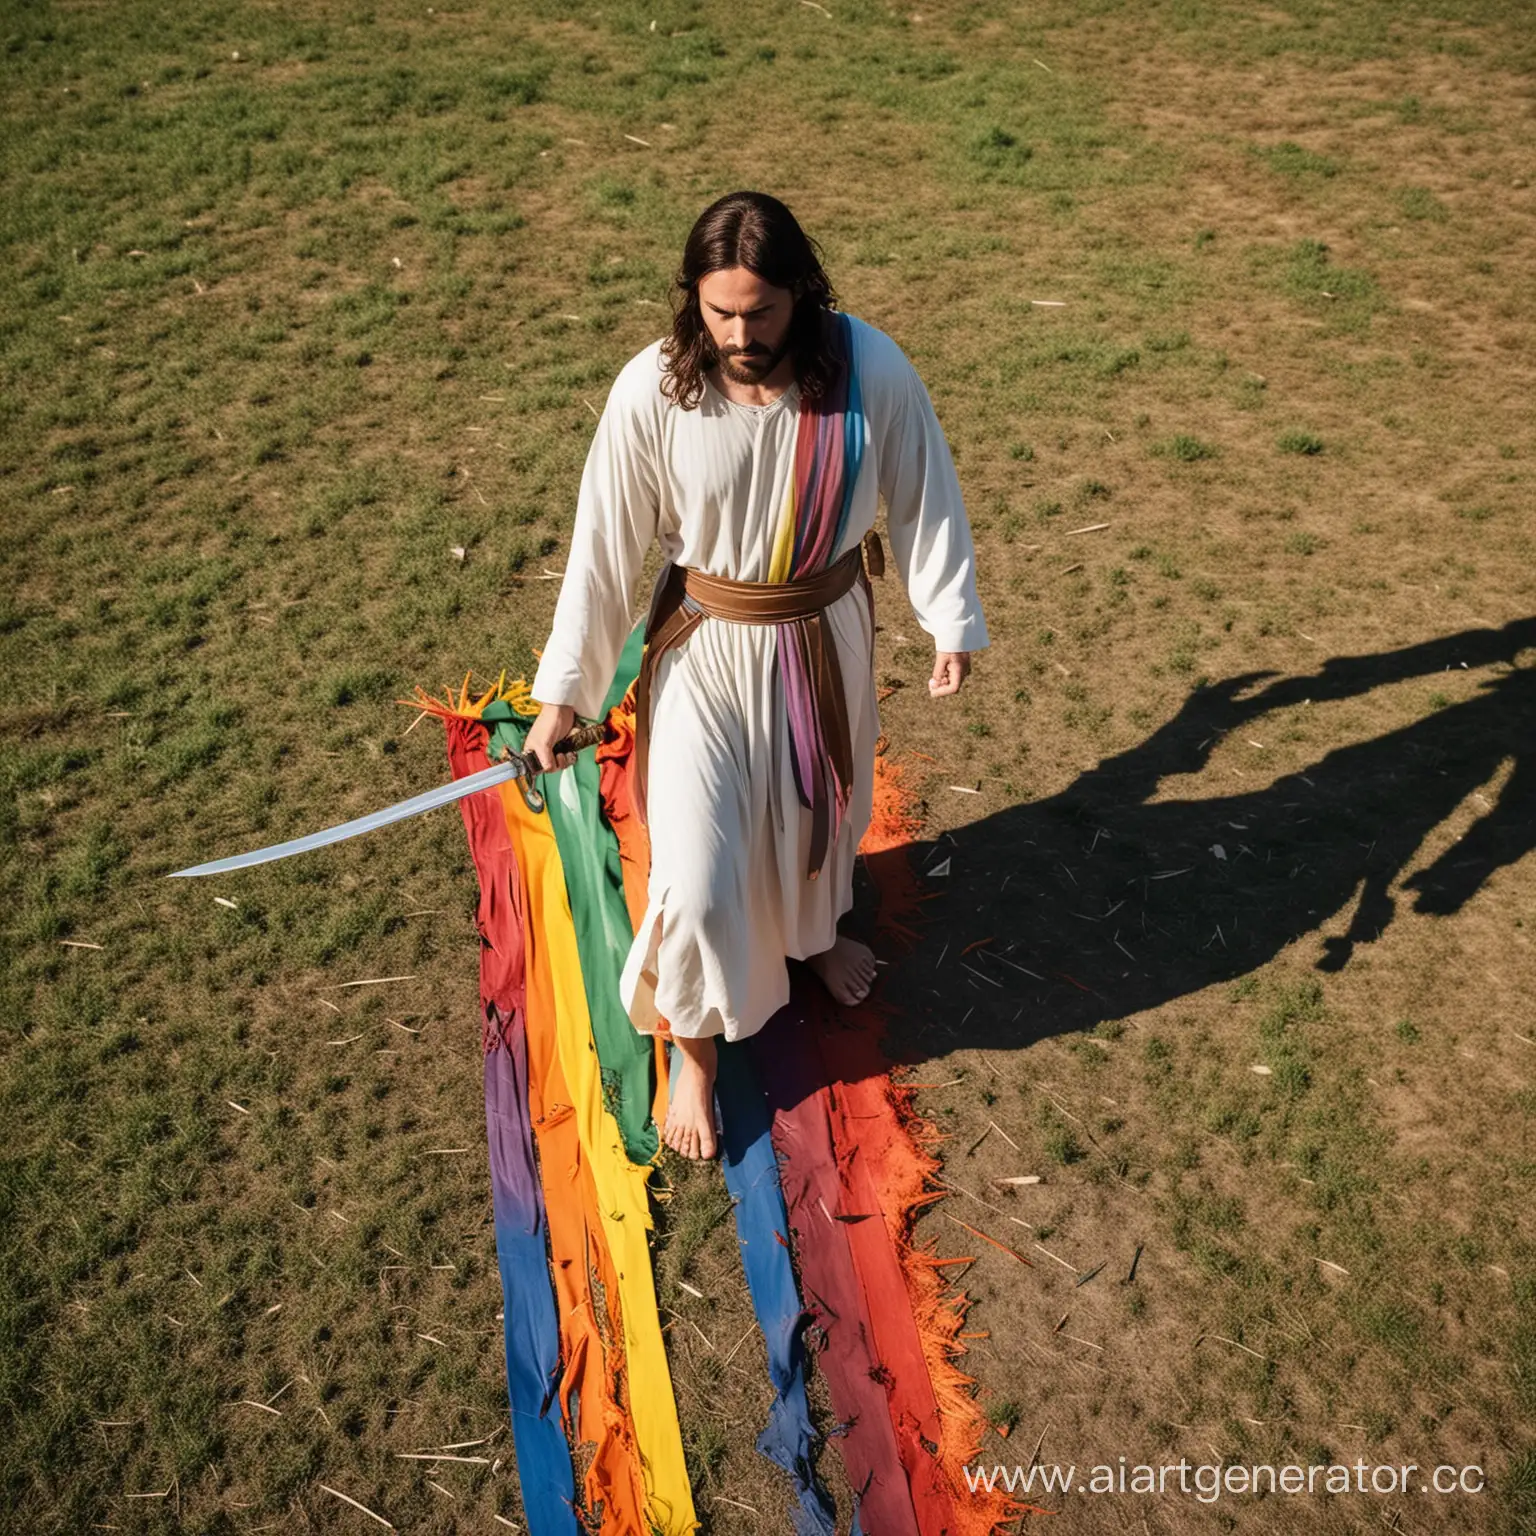 Jesus-Christ-Wielding-Sword-Against-Shredded-Rainbow-Flag